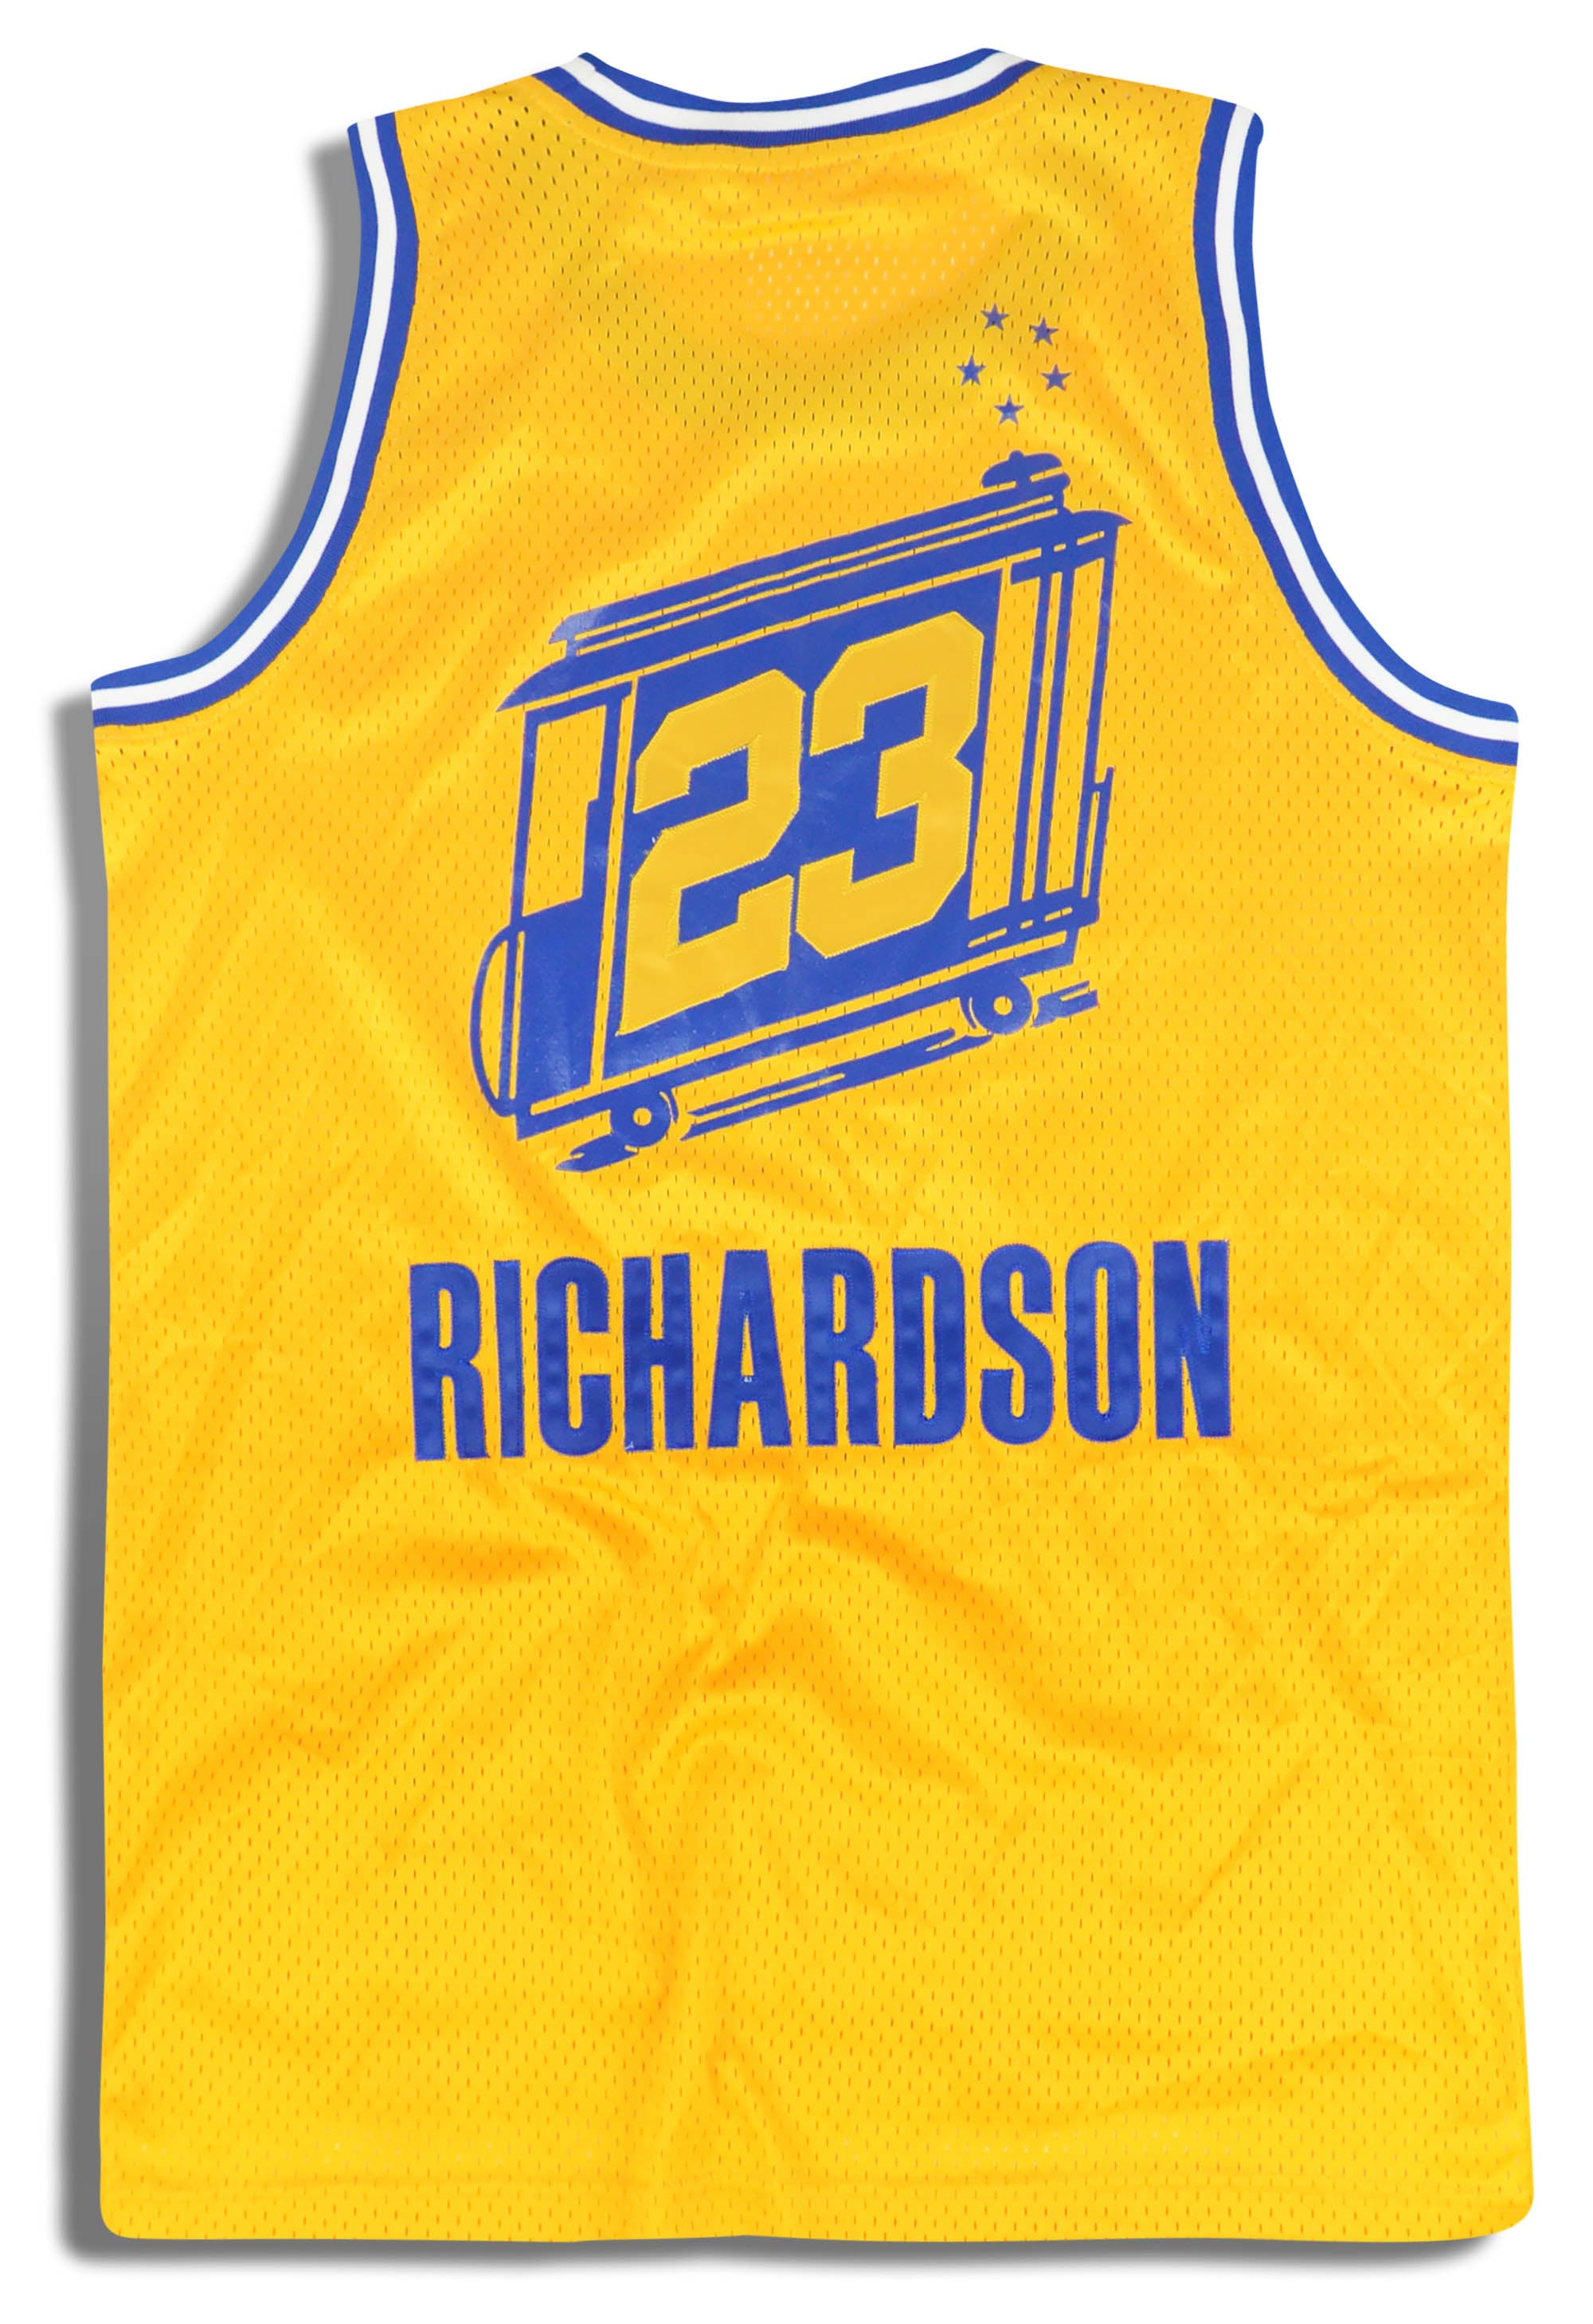 1966-67 GOLDEN STATE WARRIORS RICHARDSON #23 ADIDAS HARDWOOD CLASSICS SWINGMAN JERSEY (HOME) M